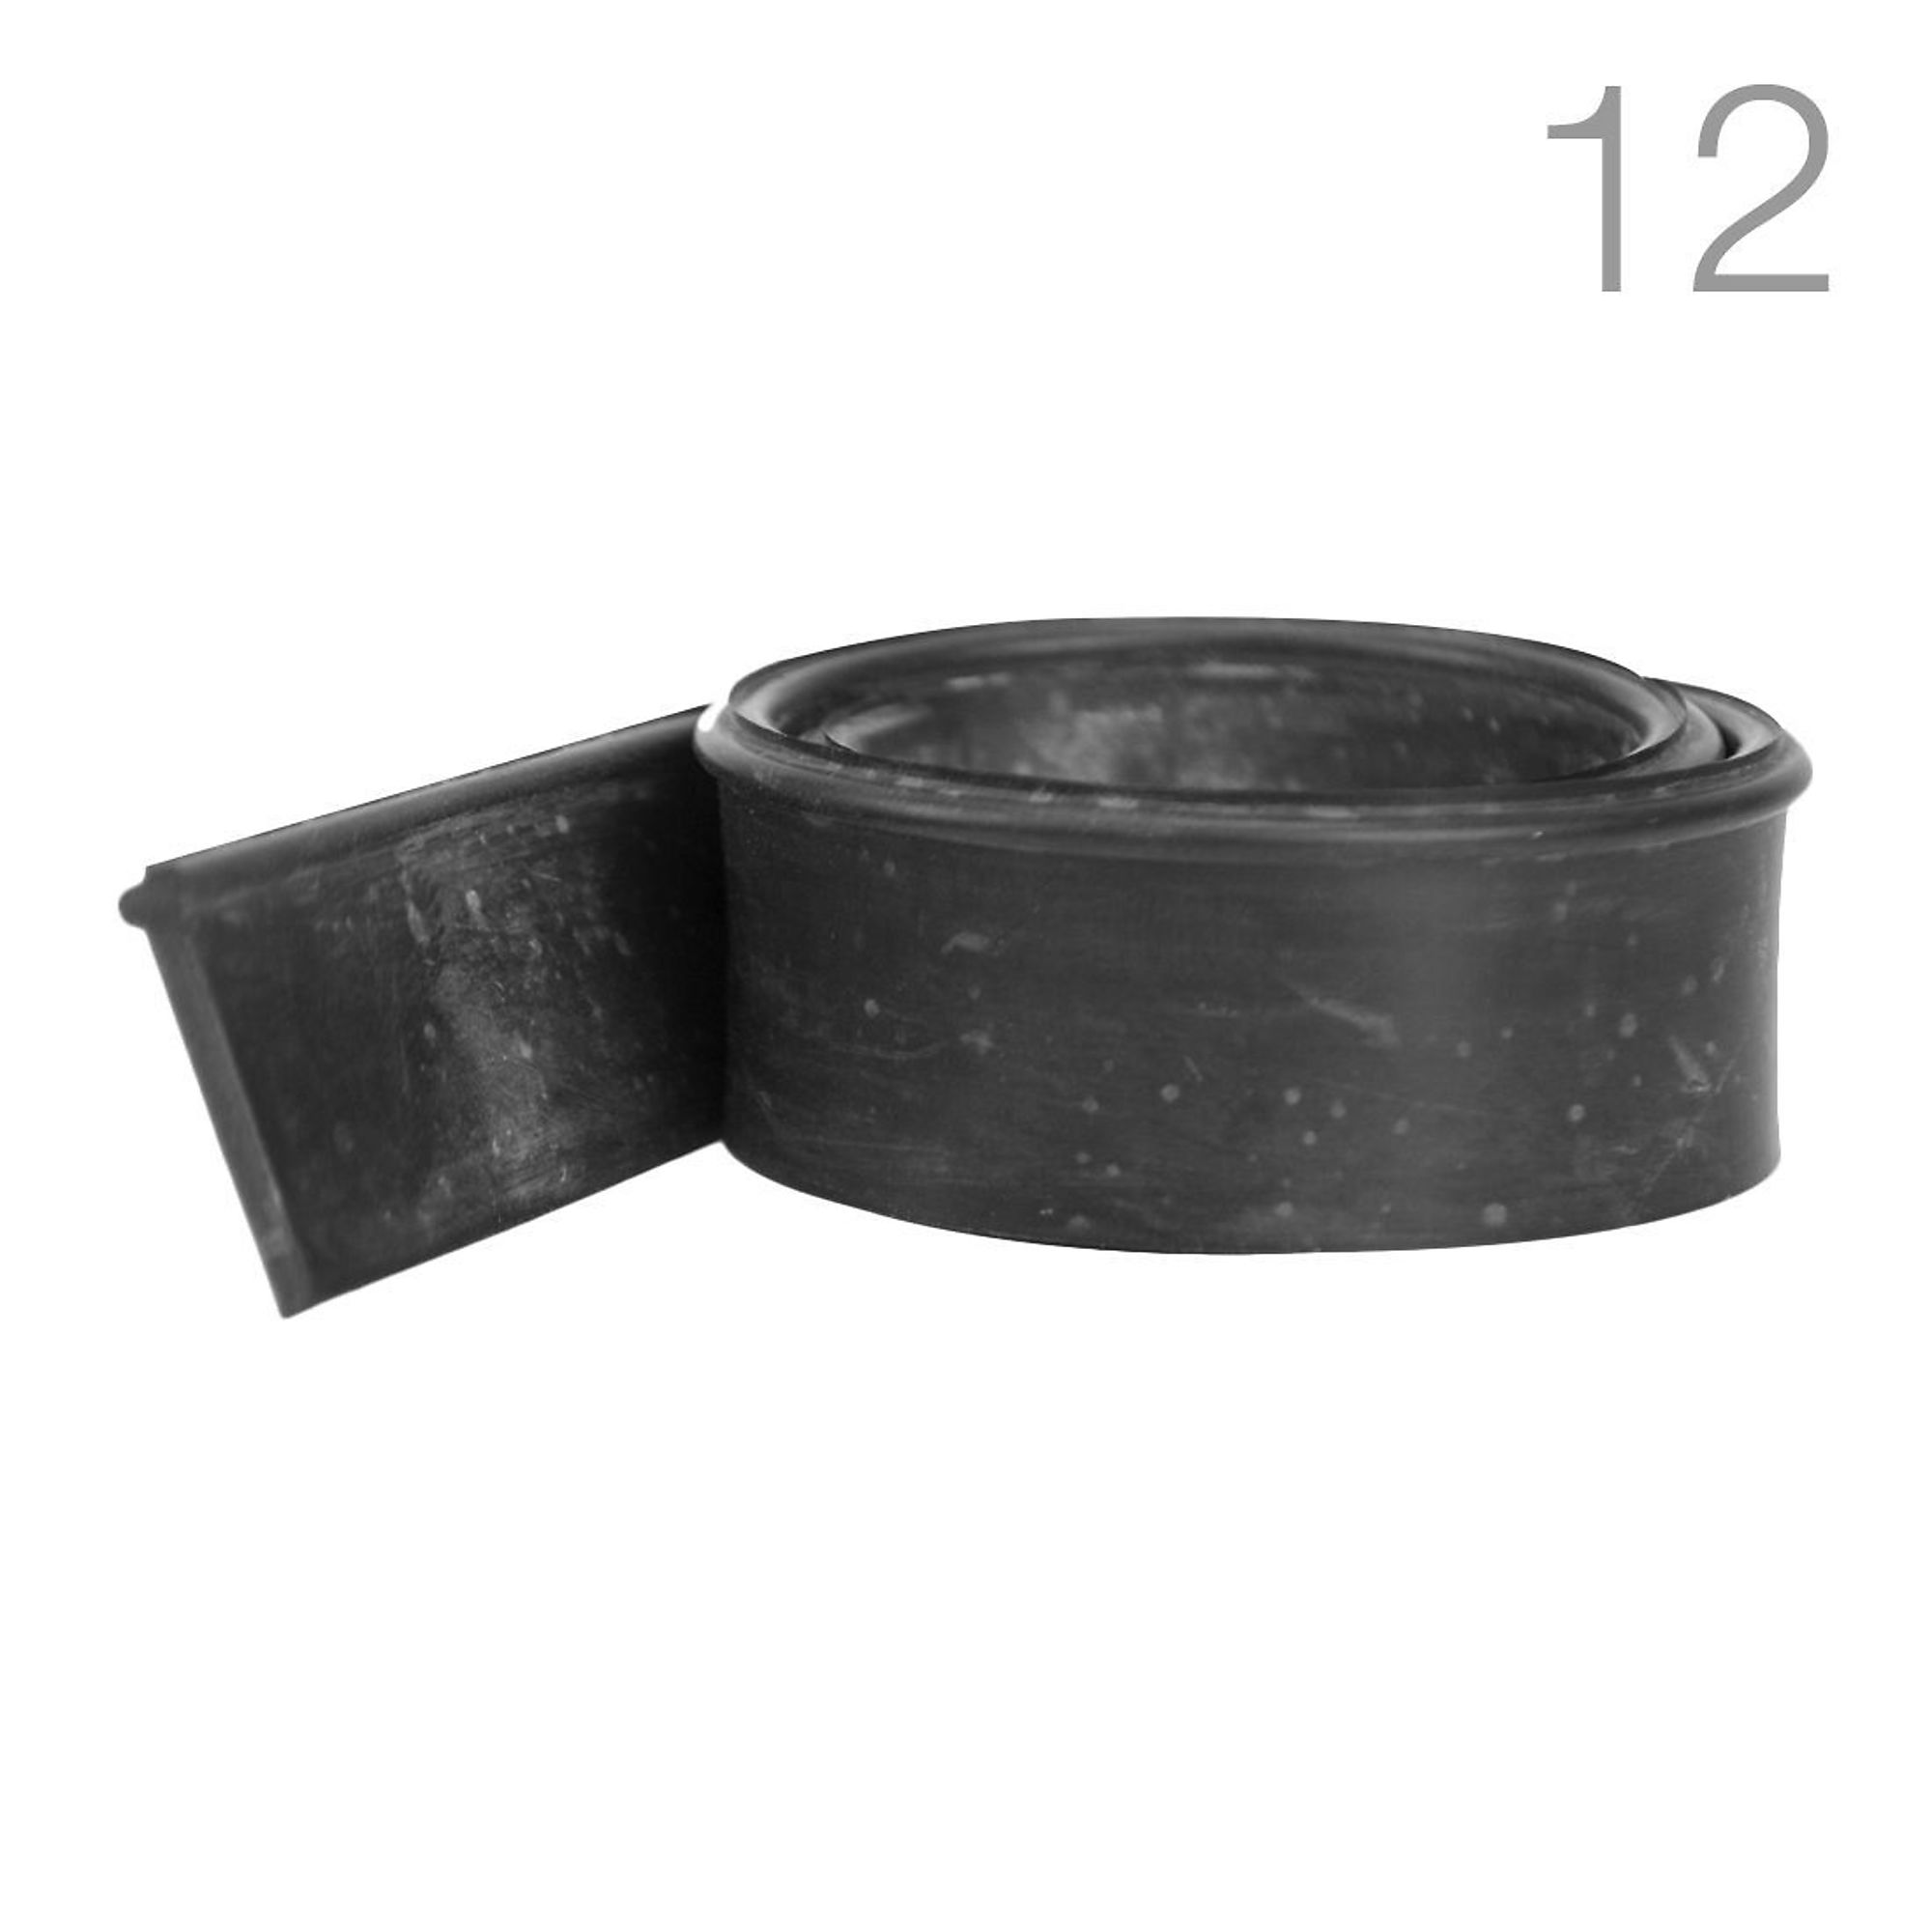 BlackDiamond, Flat Top Medium Squeegee Rubber 12 Pack - 14Inch, Model 012-05-47